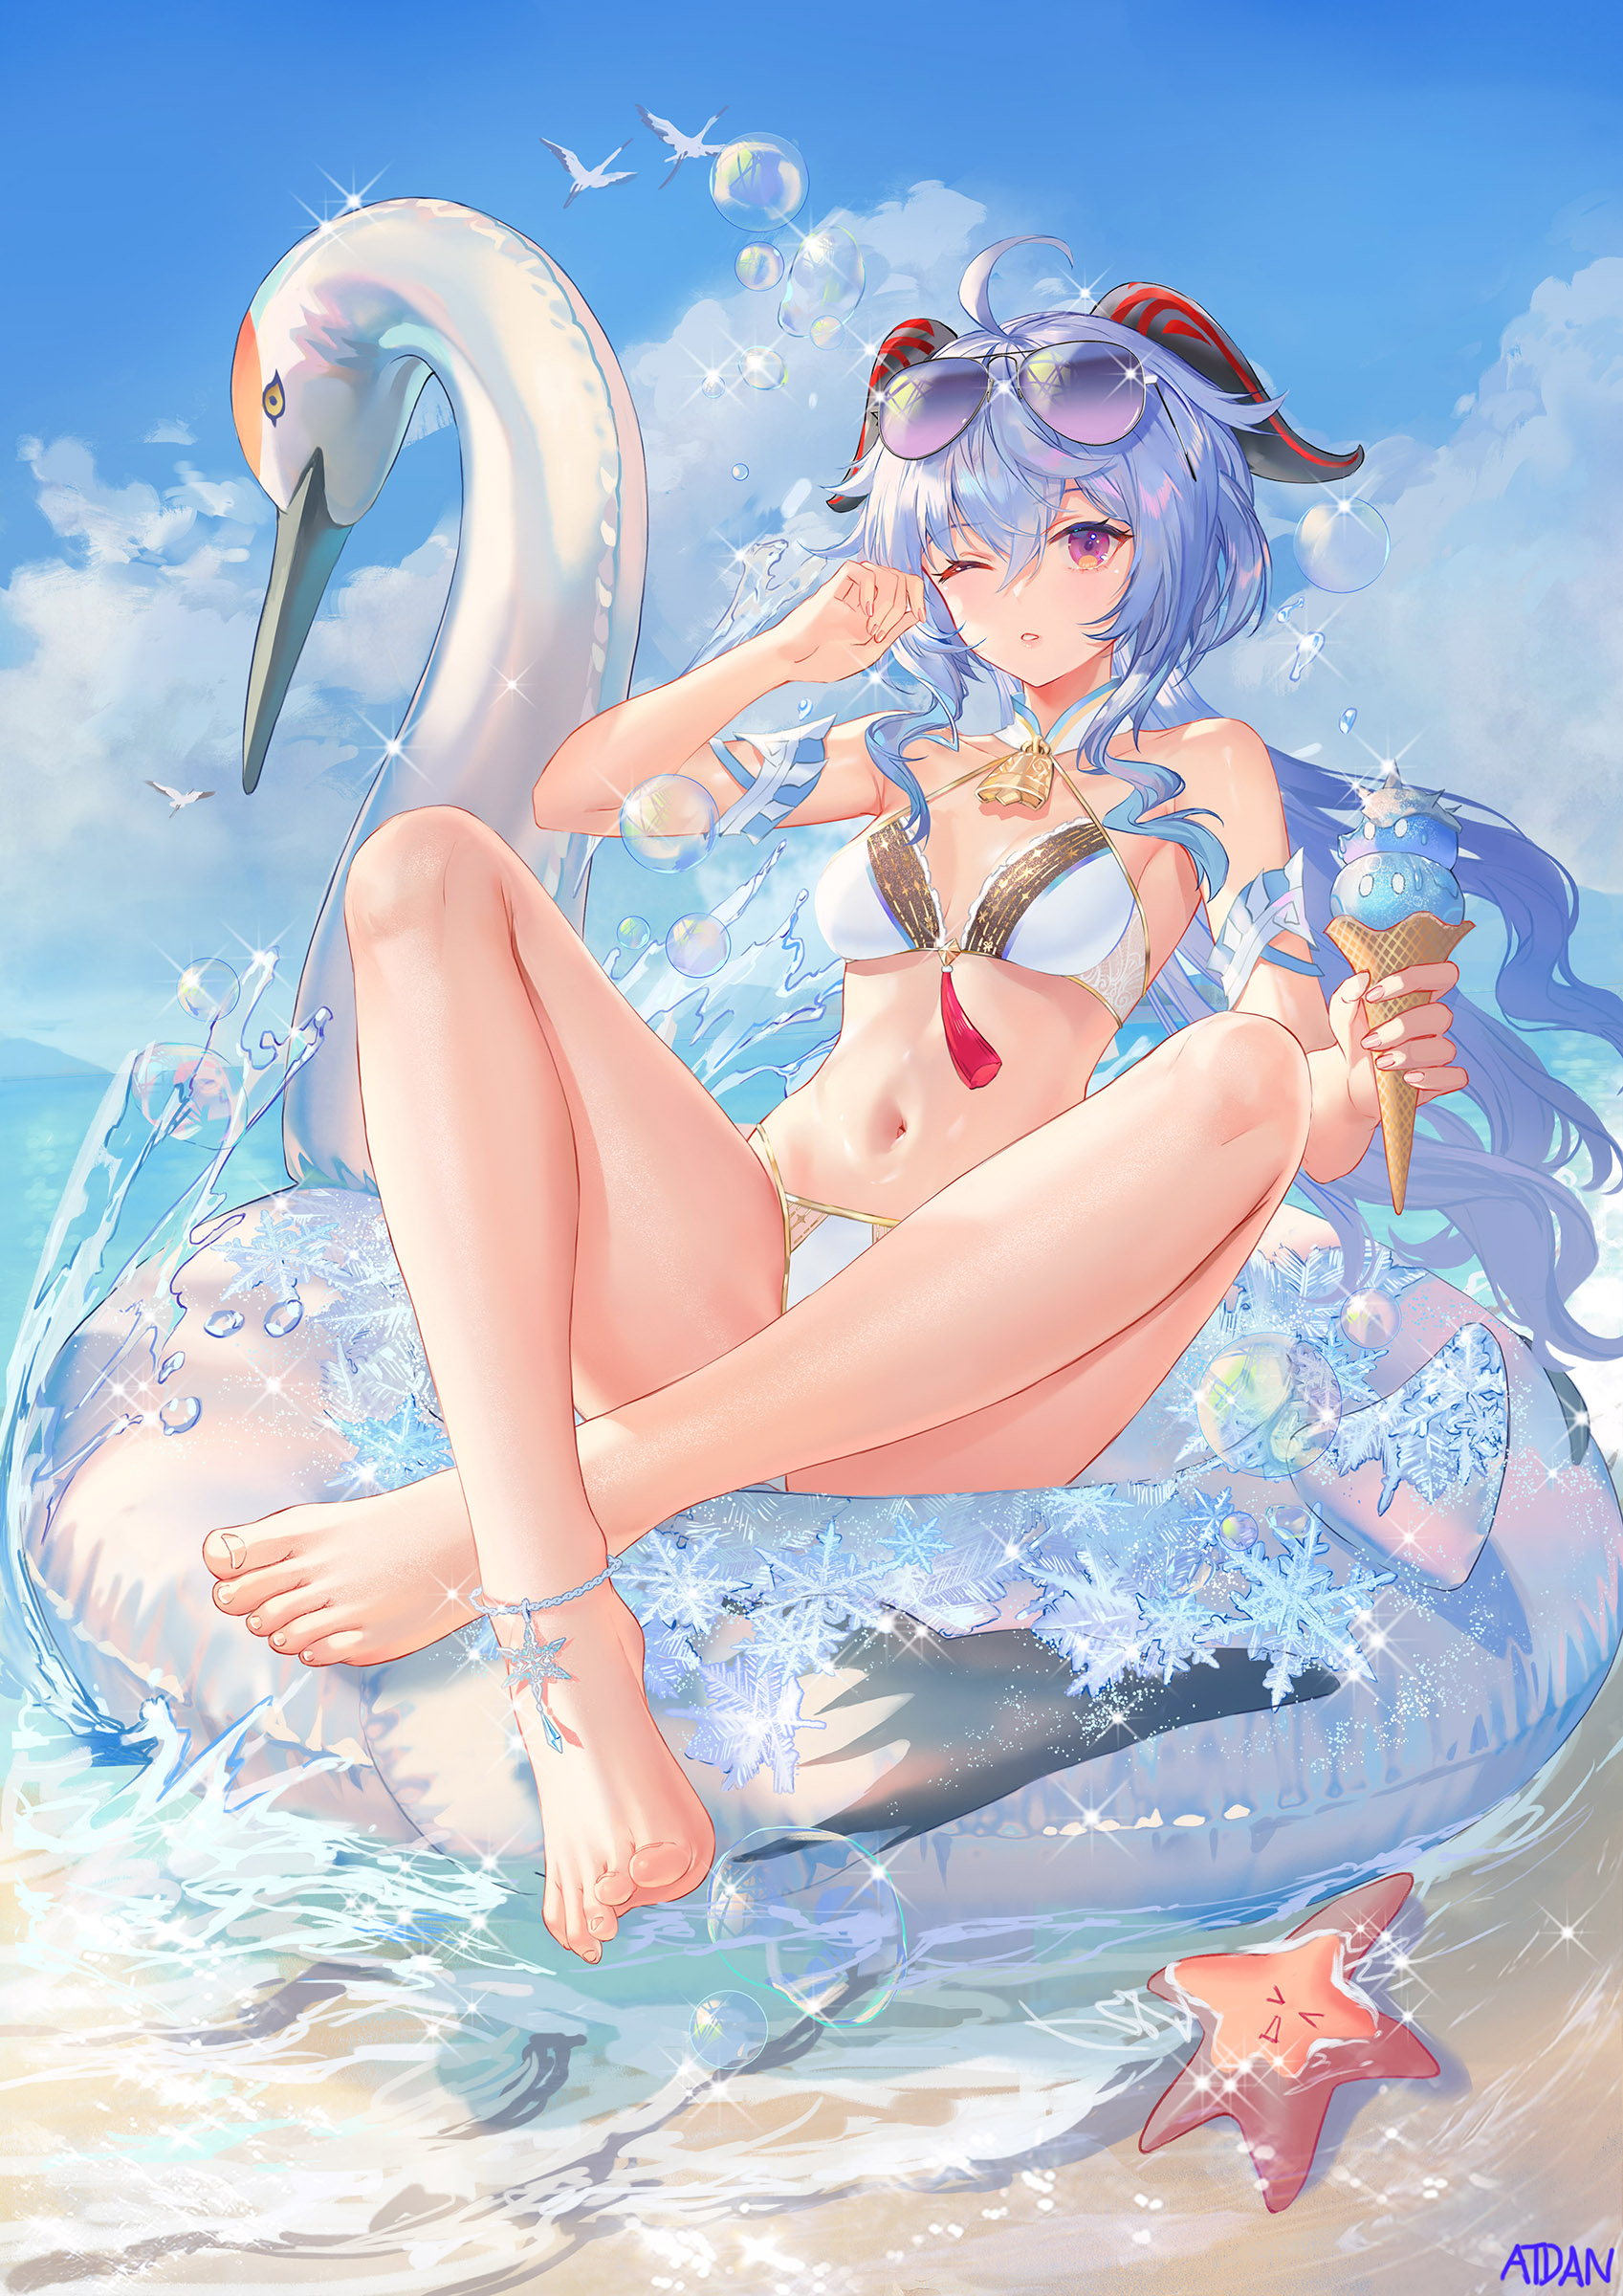 Anime 1697x2400 anime anime girls Ganyu (Genshin Impact) Genshin Impact blue hair horns bikini swans artwork Atdan